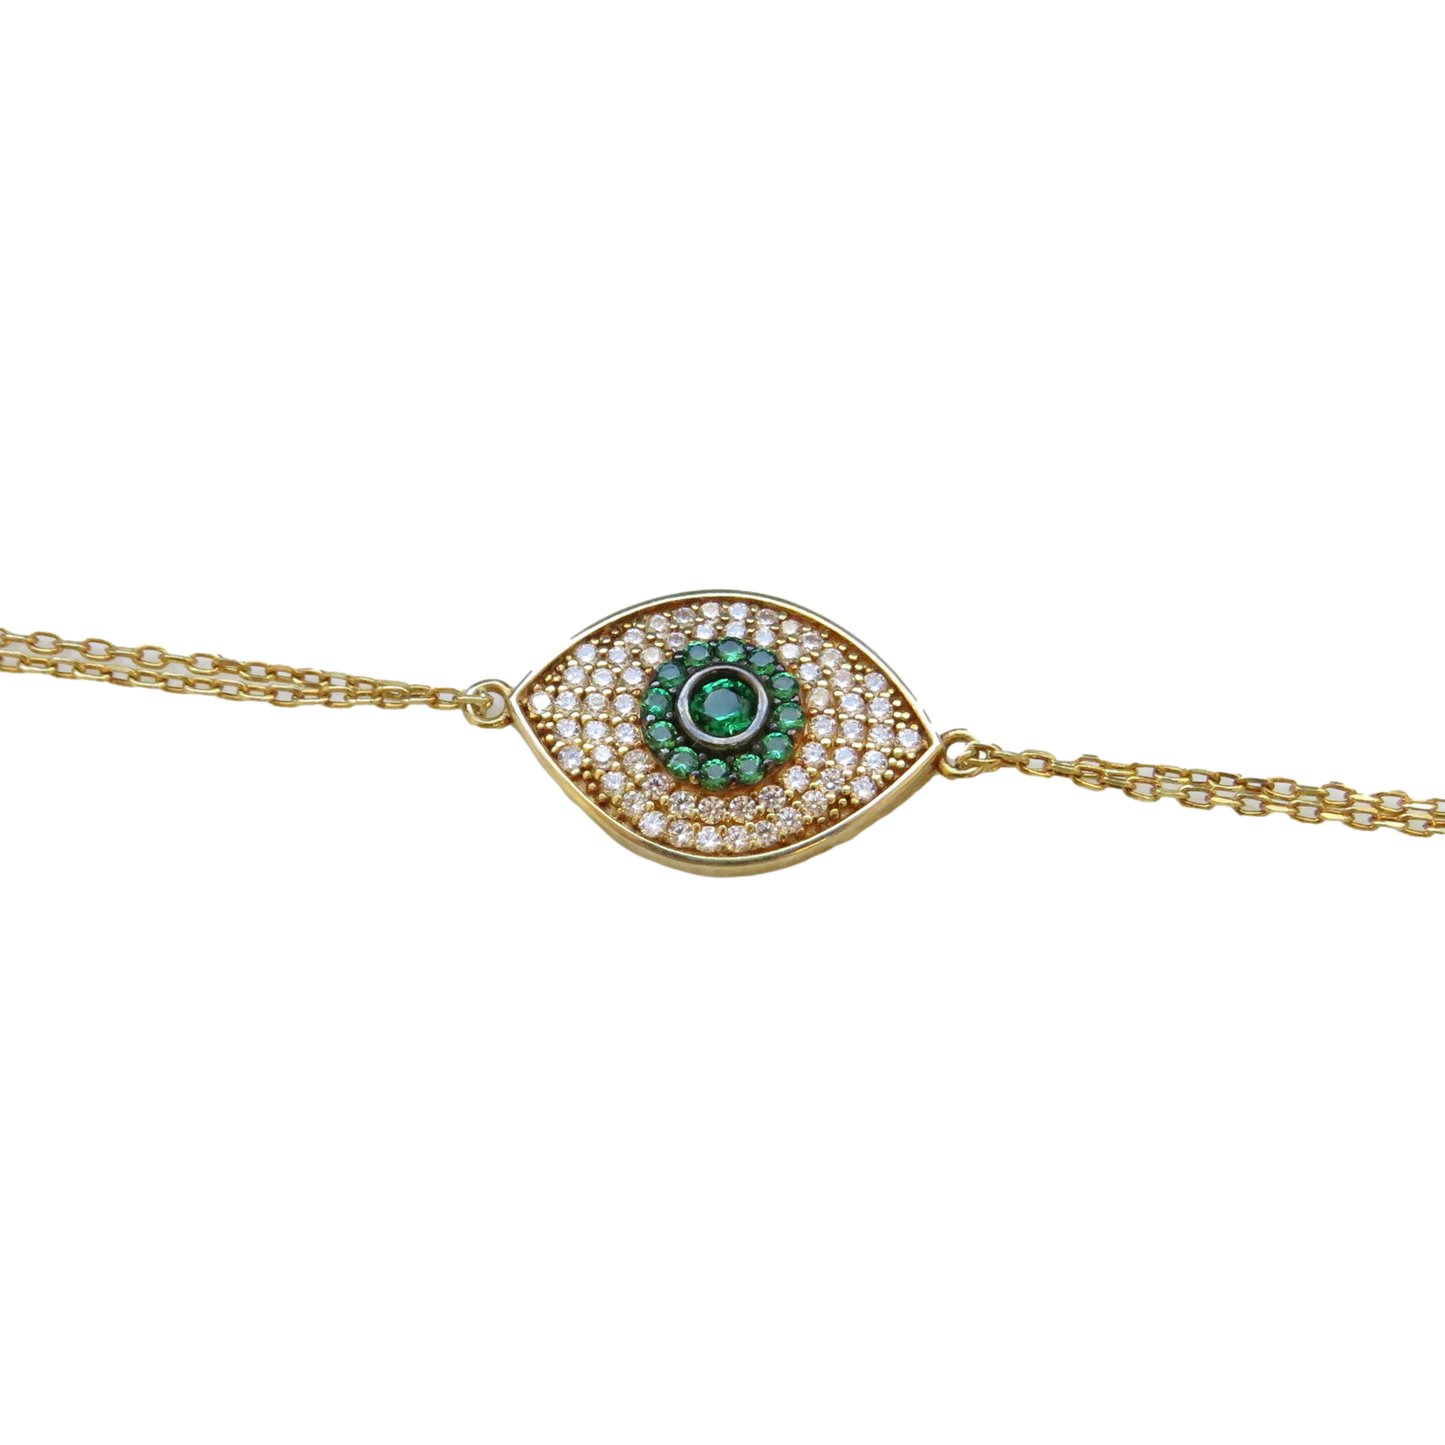 Green Eye Bracelet